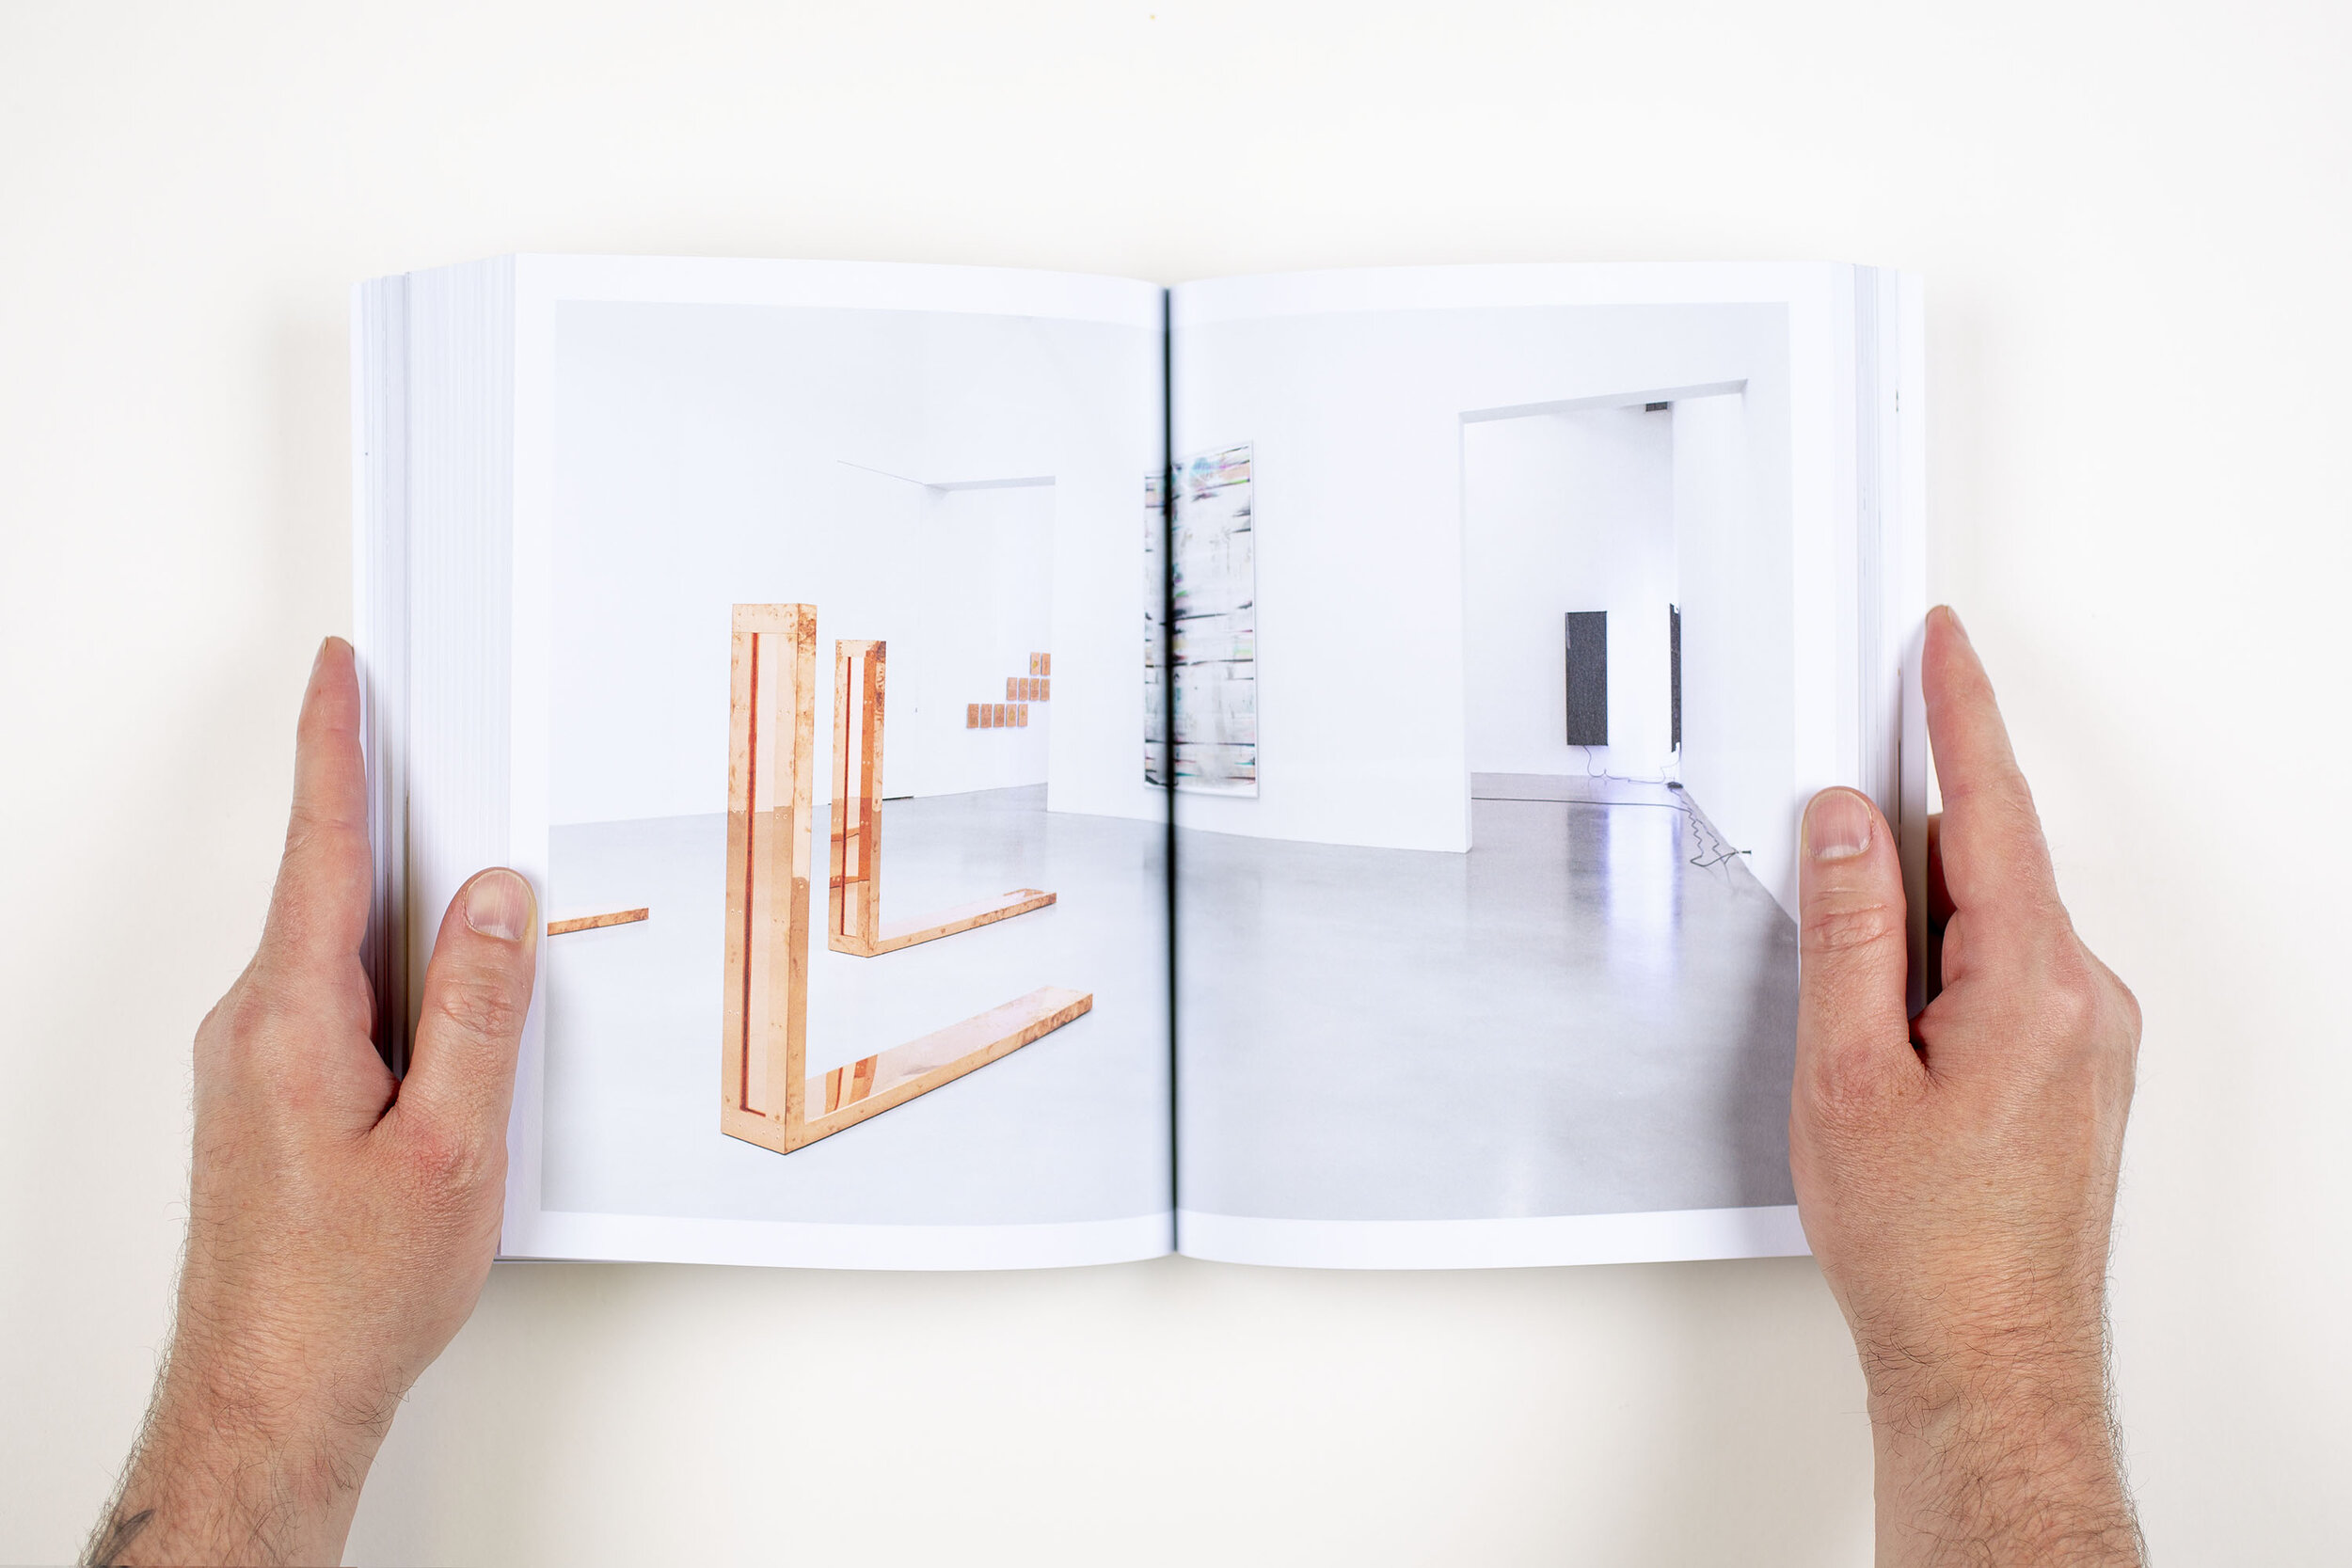   Walead Beshty: Work in Exhibition, 2011–2020 , Monograph, (London: Koenig Books, 2020). 